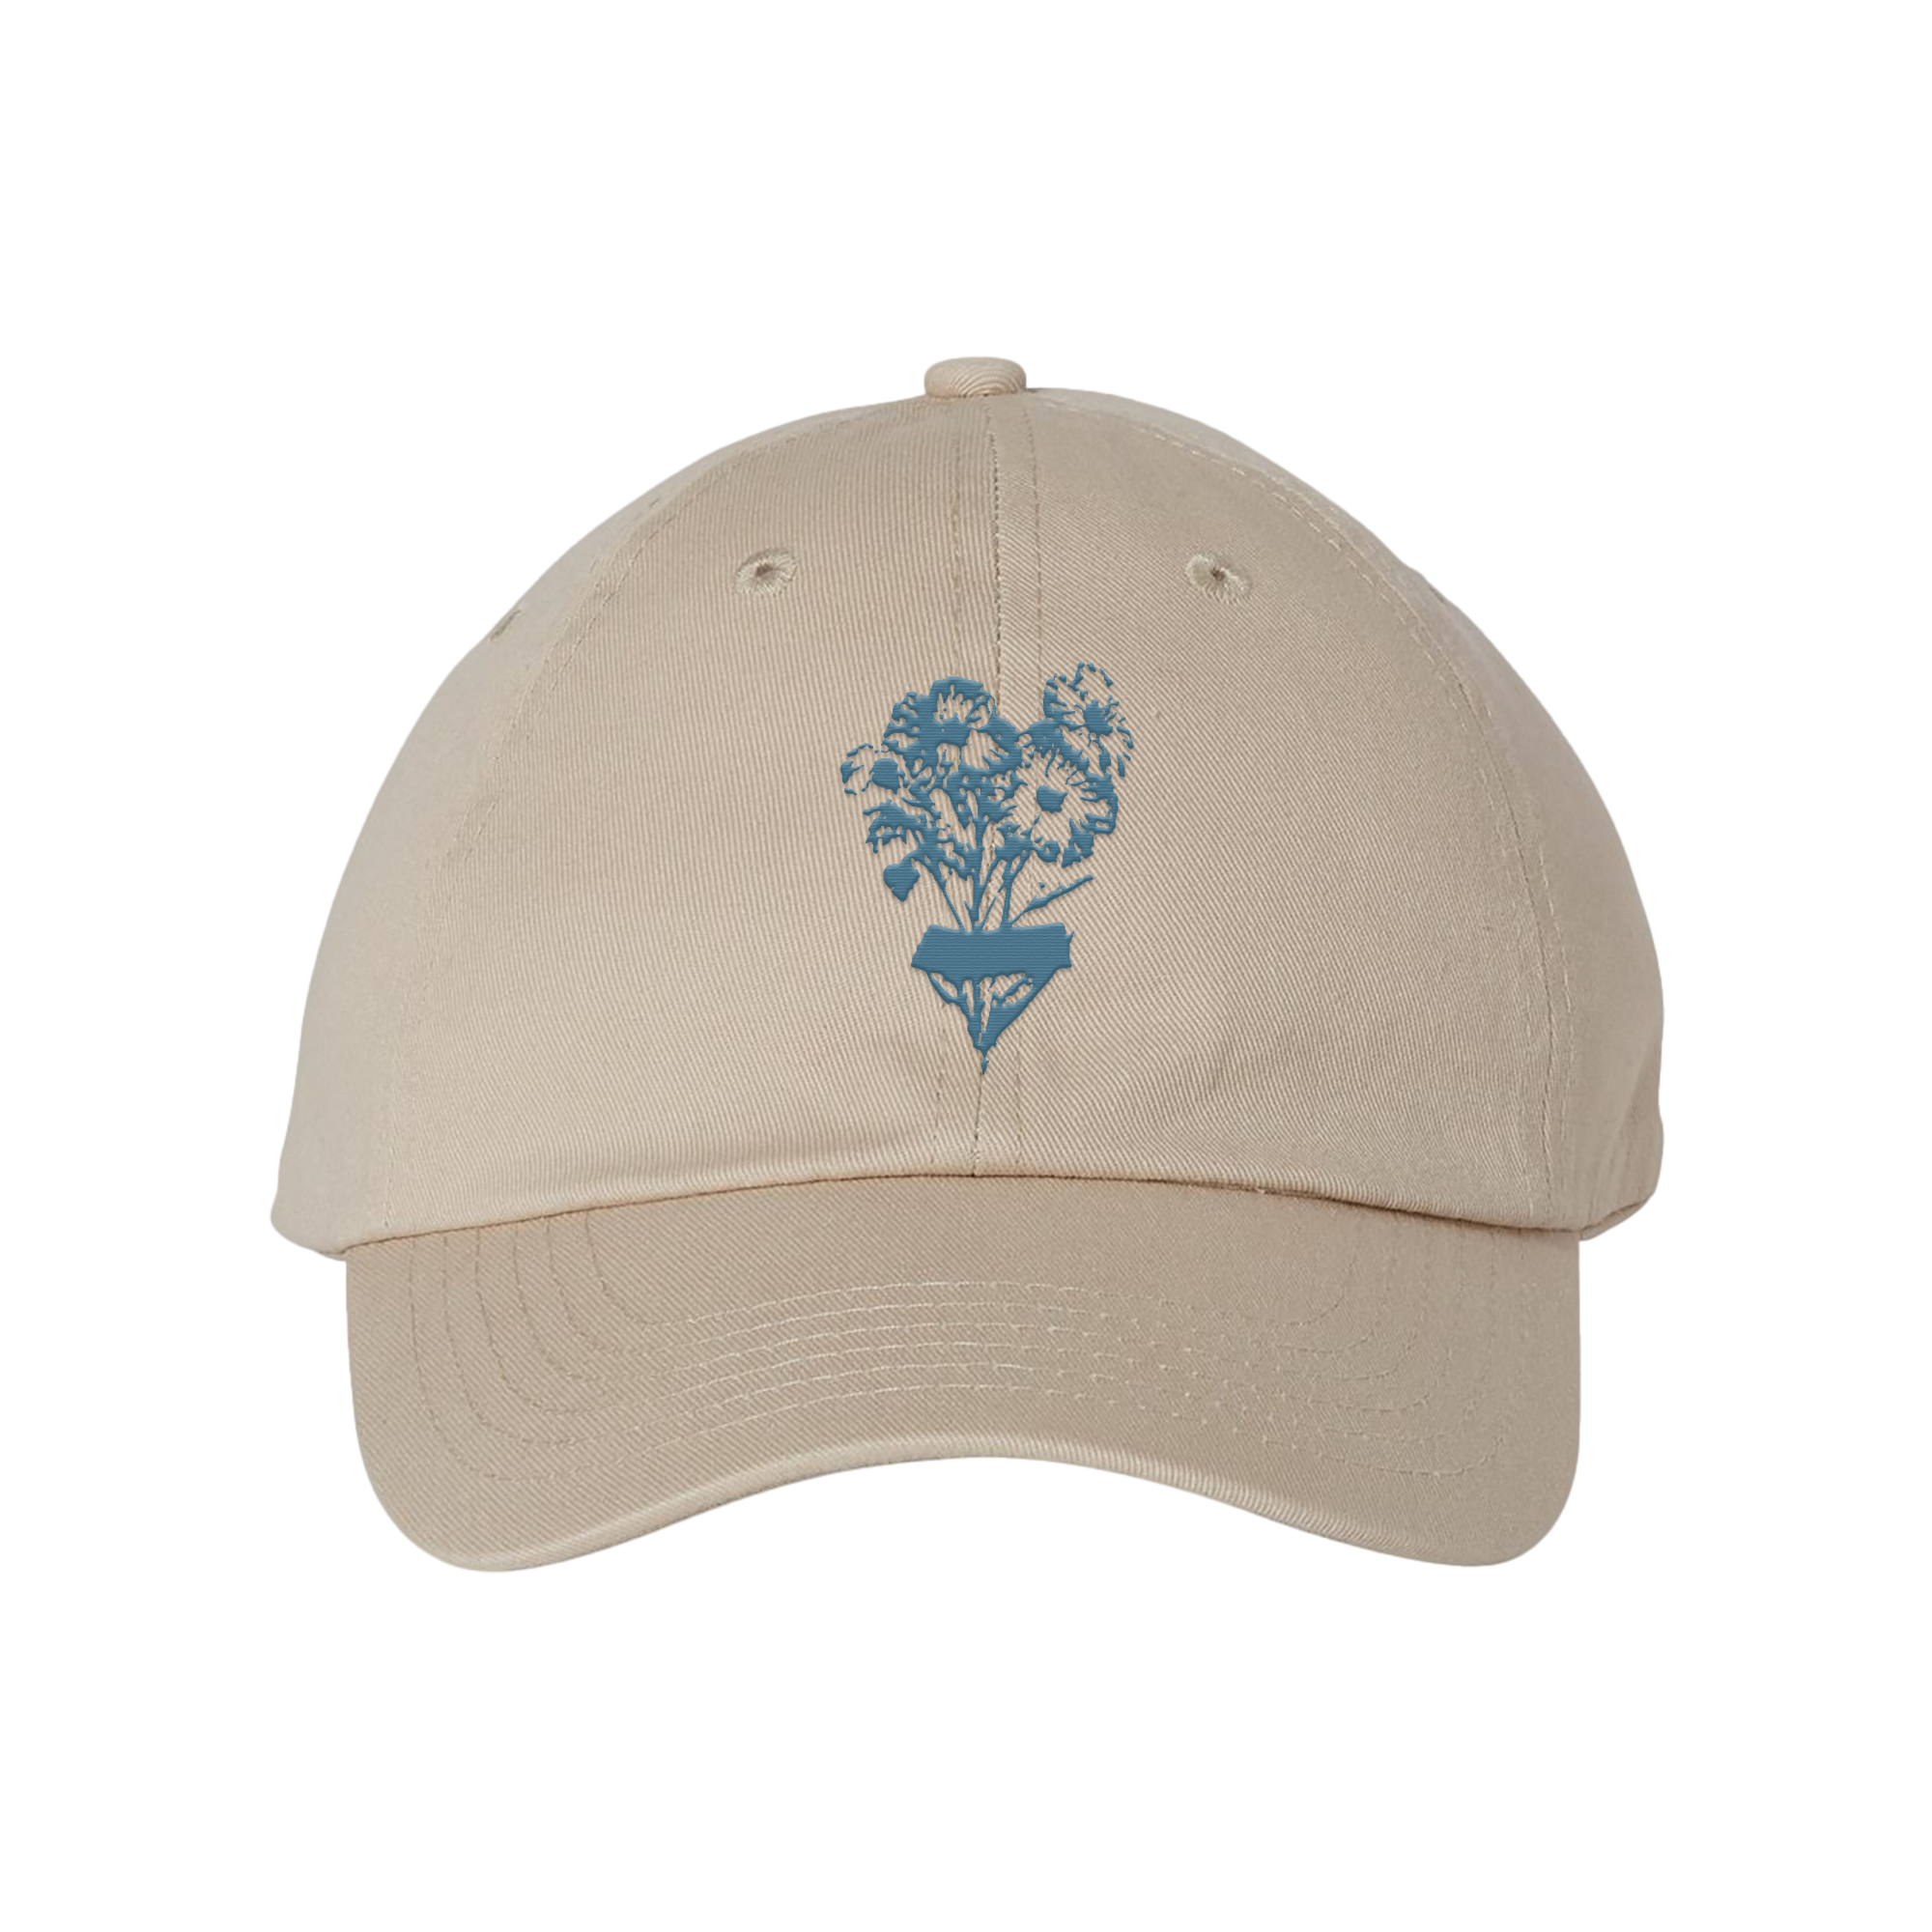 Sydney Rose - Flower Tape Hat